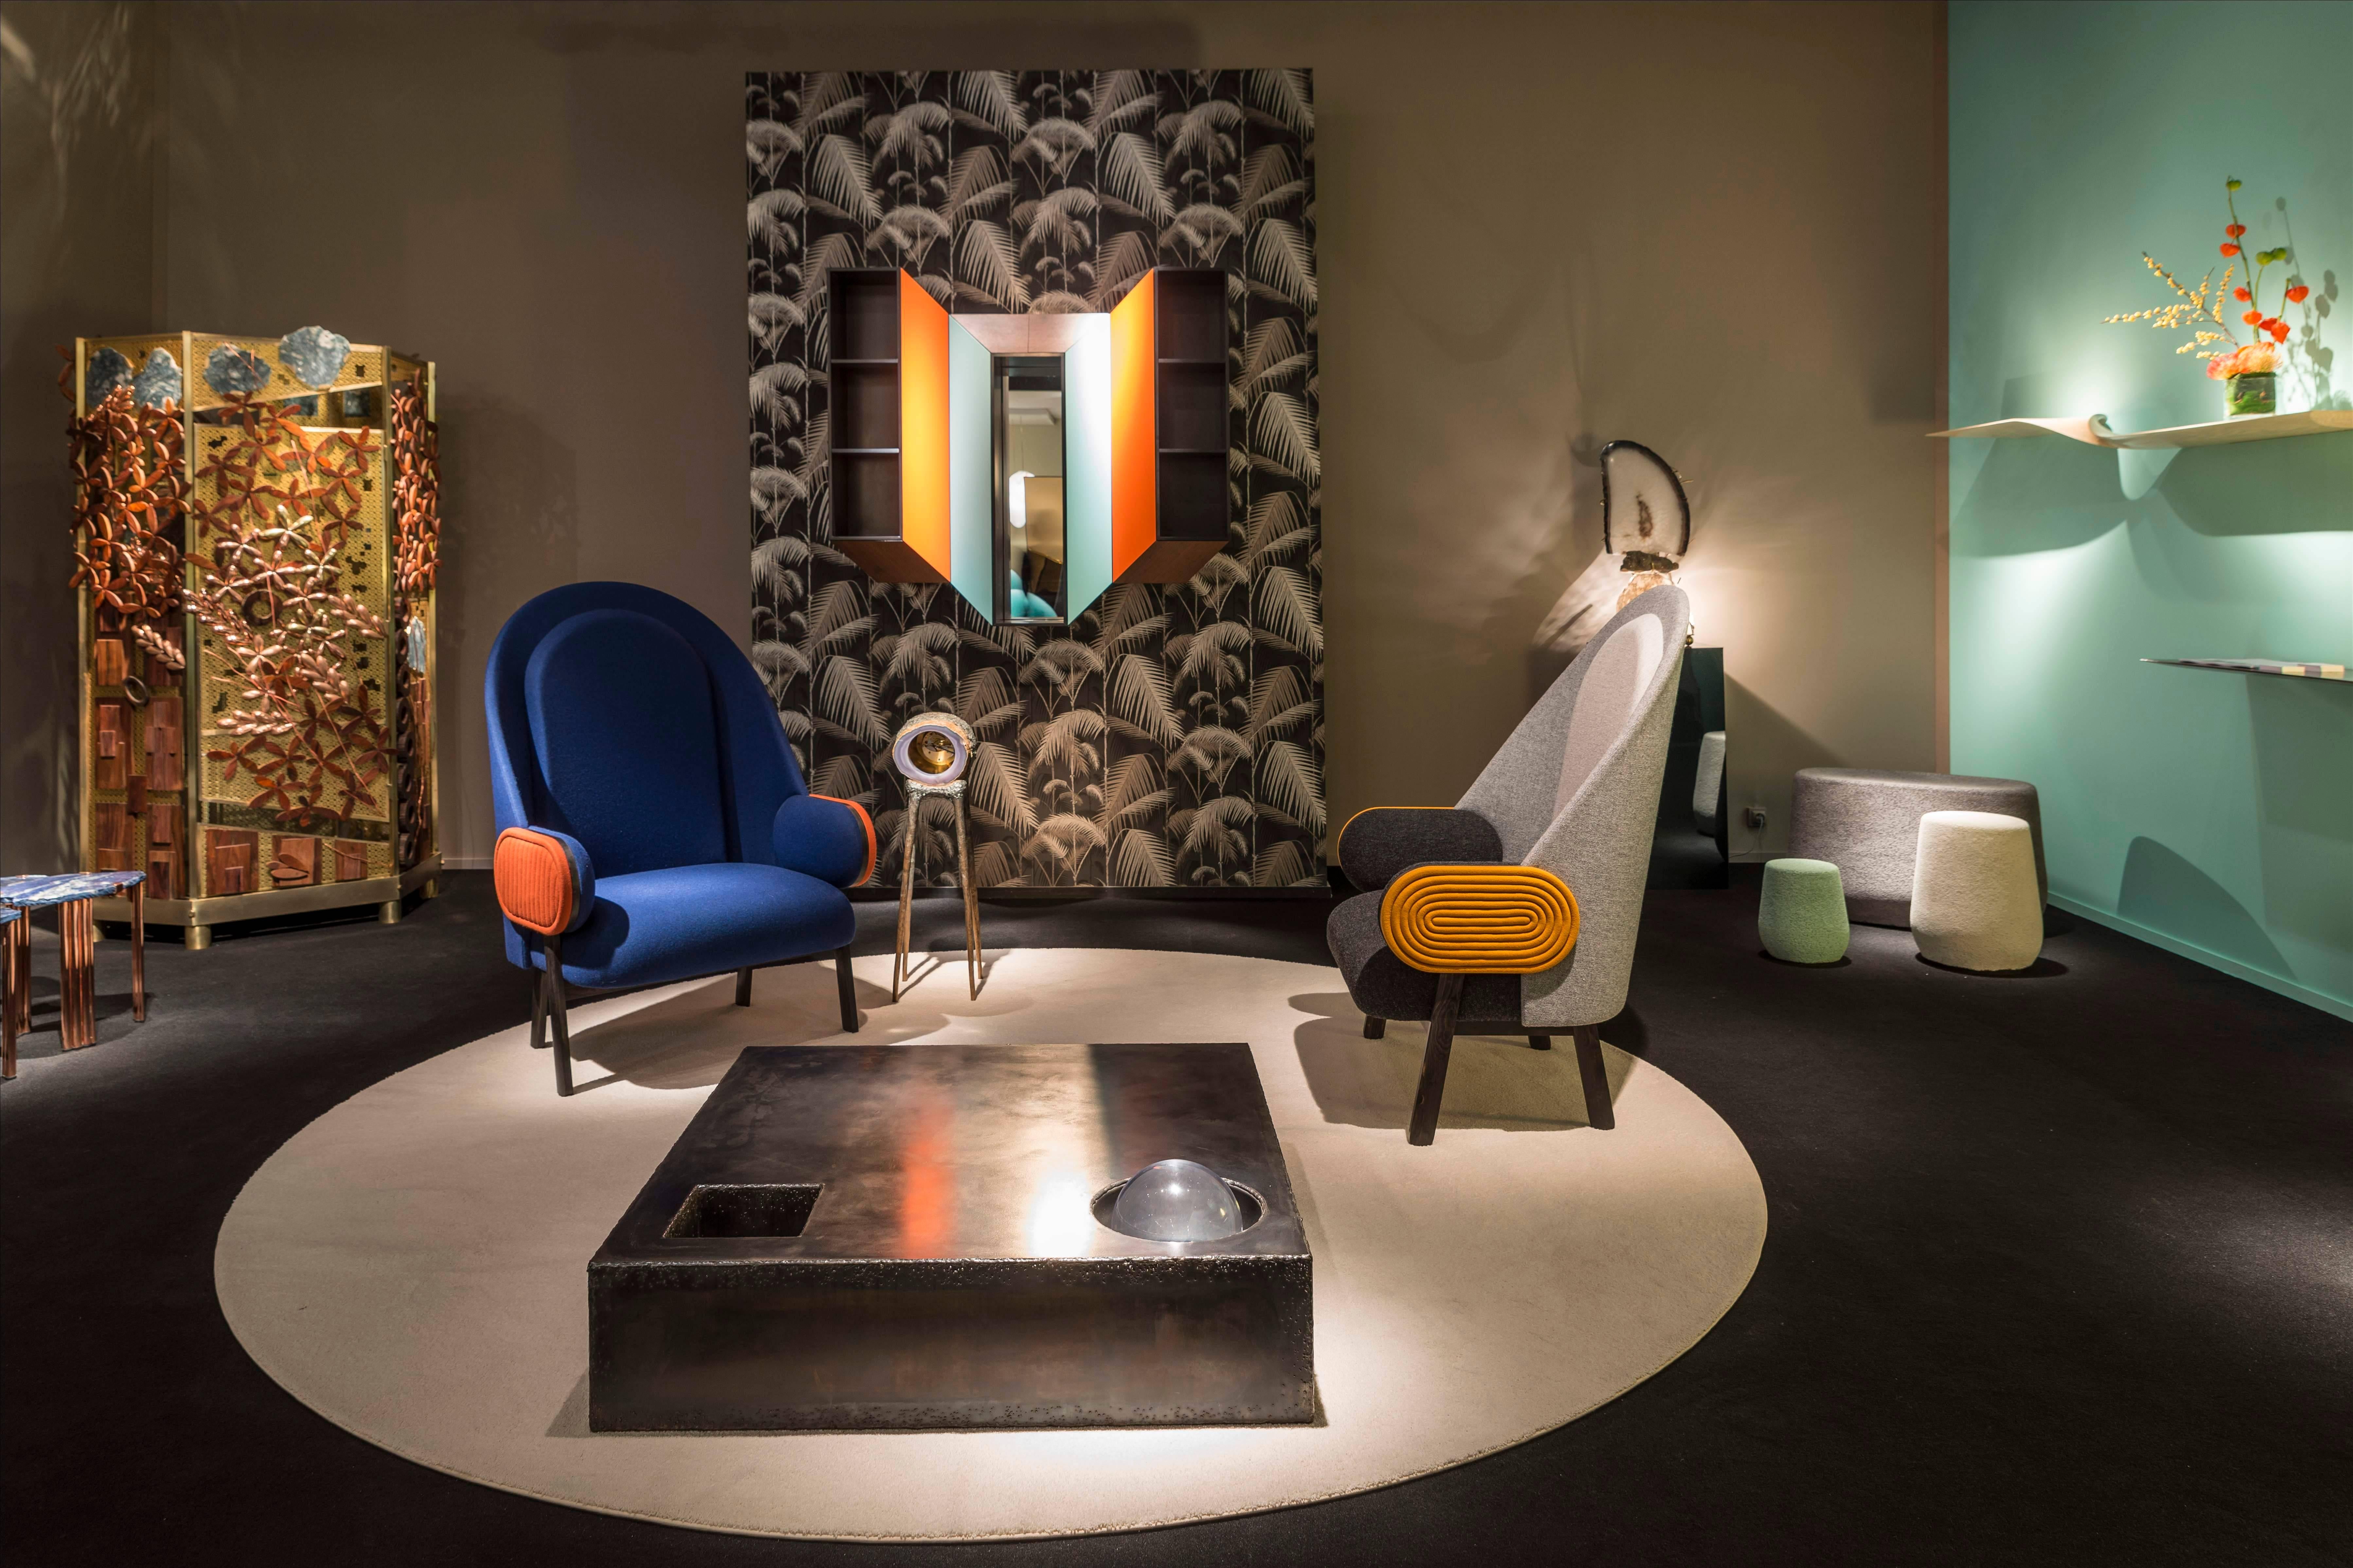 Ebony Collectible Design 'Moon' Armchair, a Contemporary Piece with a Vintage Twist